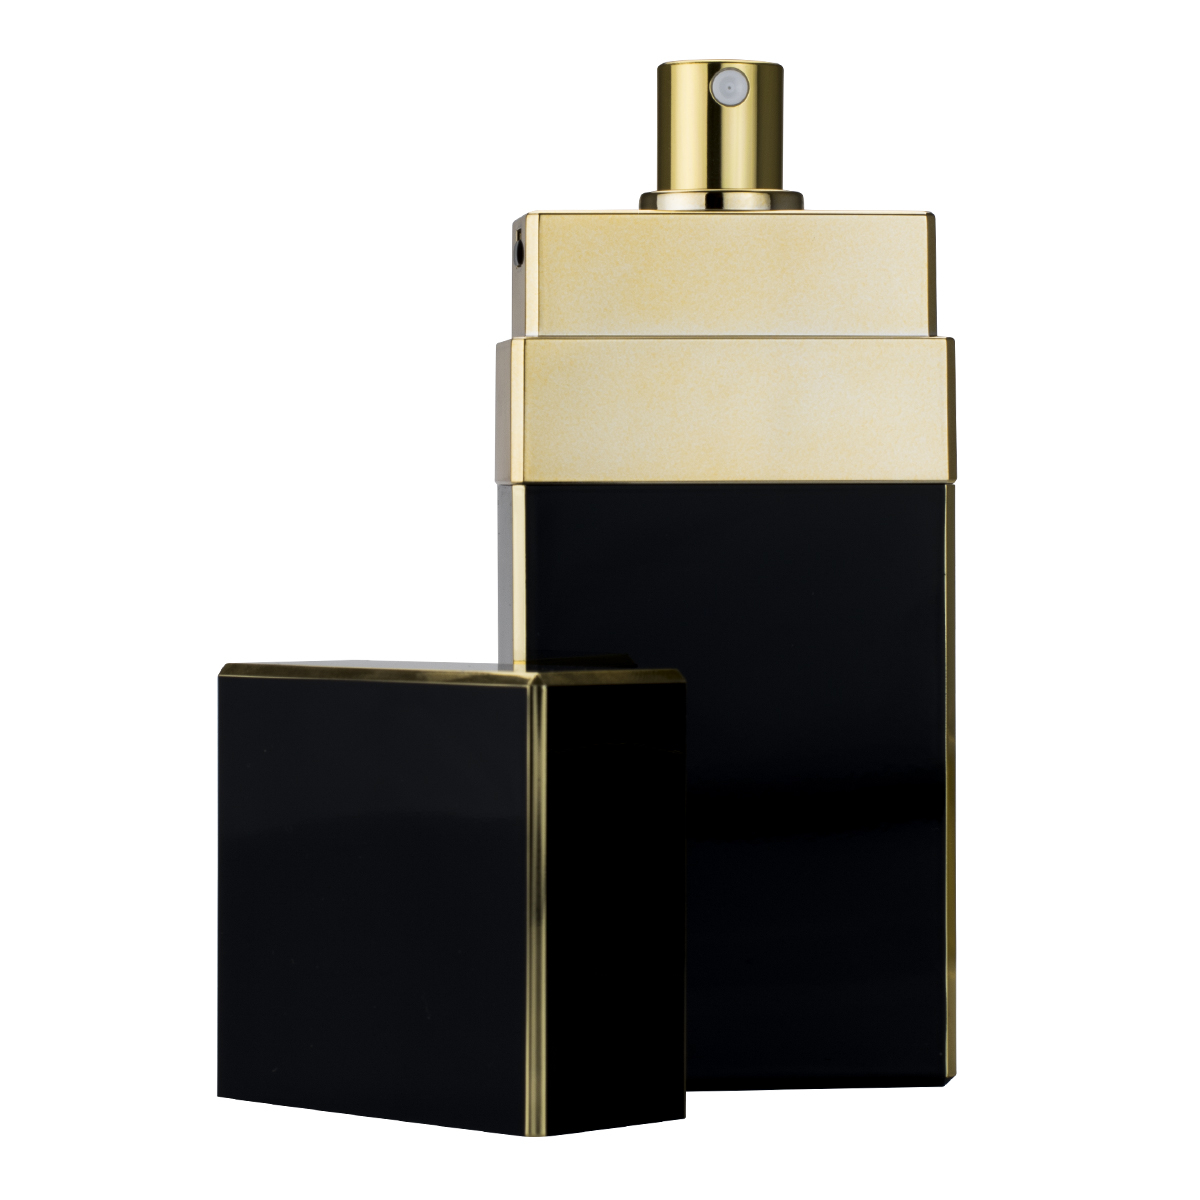 Chanel - Coco Eau De Parfum Refillable Spray 60ml/2oz - Eau De Parfum, Free Worldwide Shipping